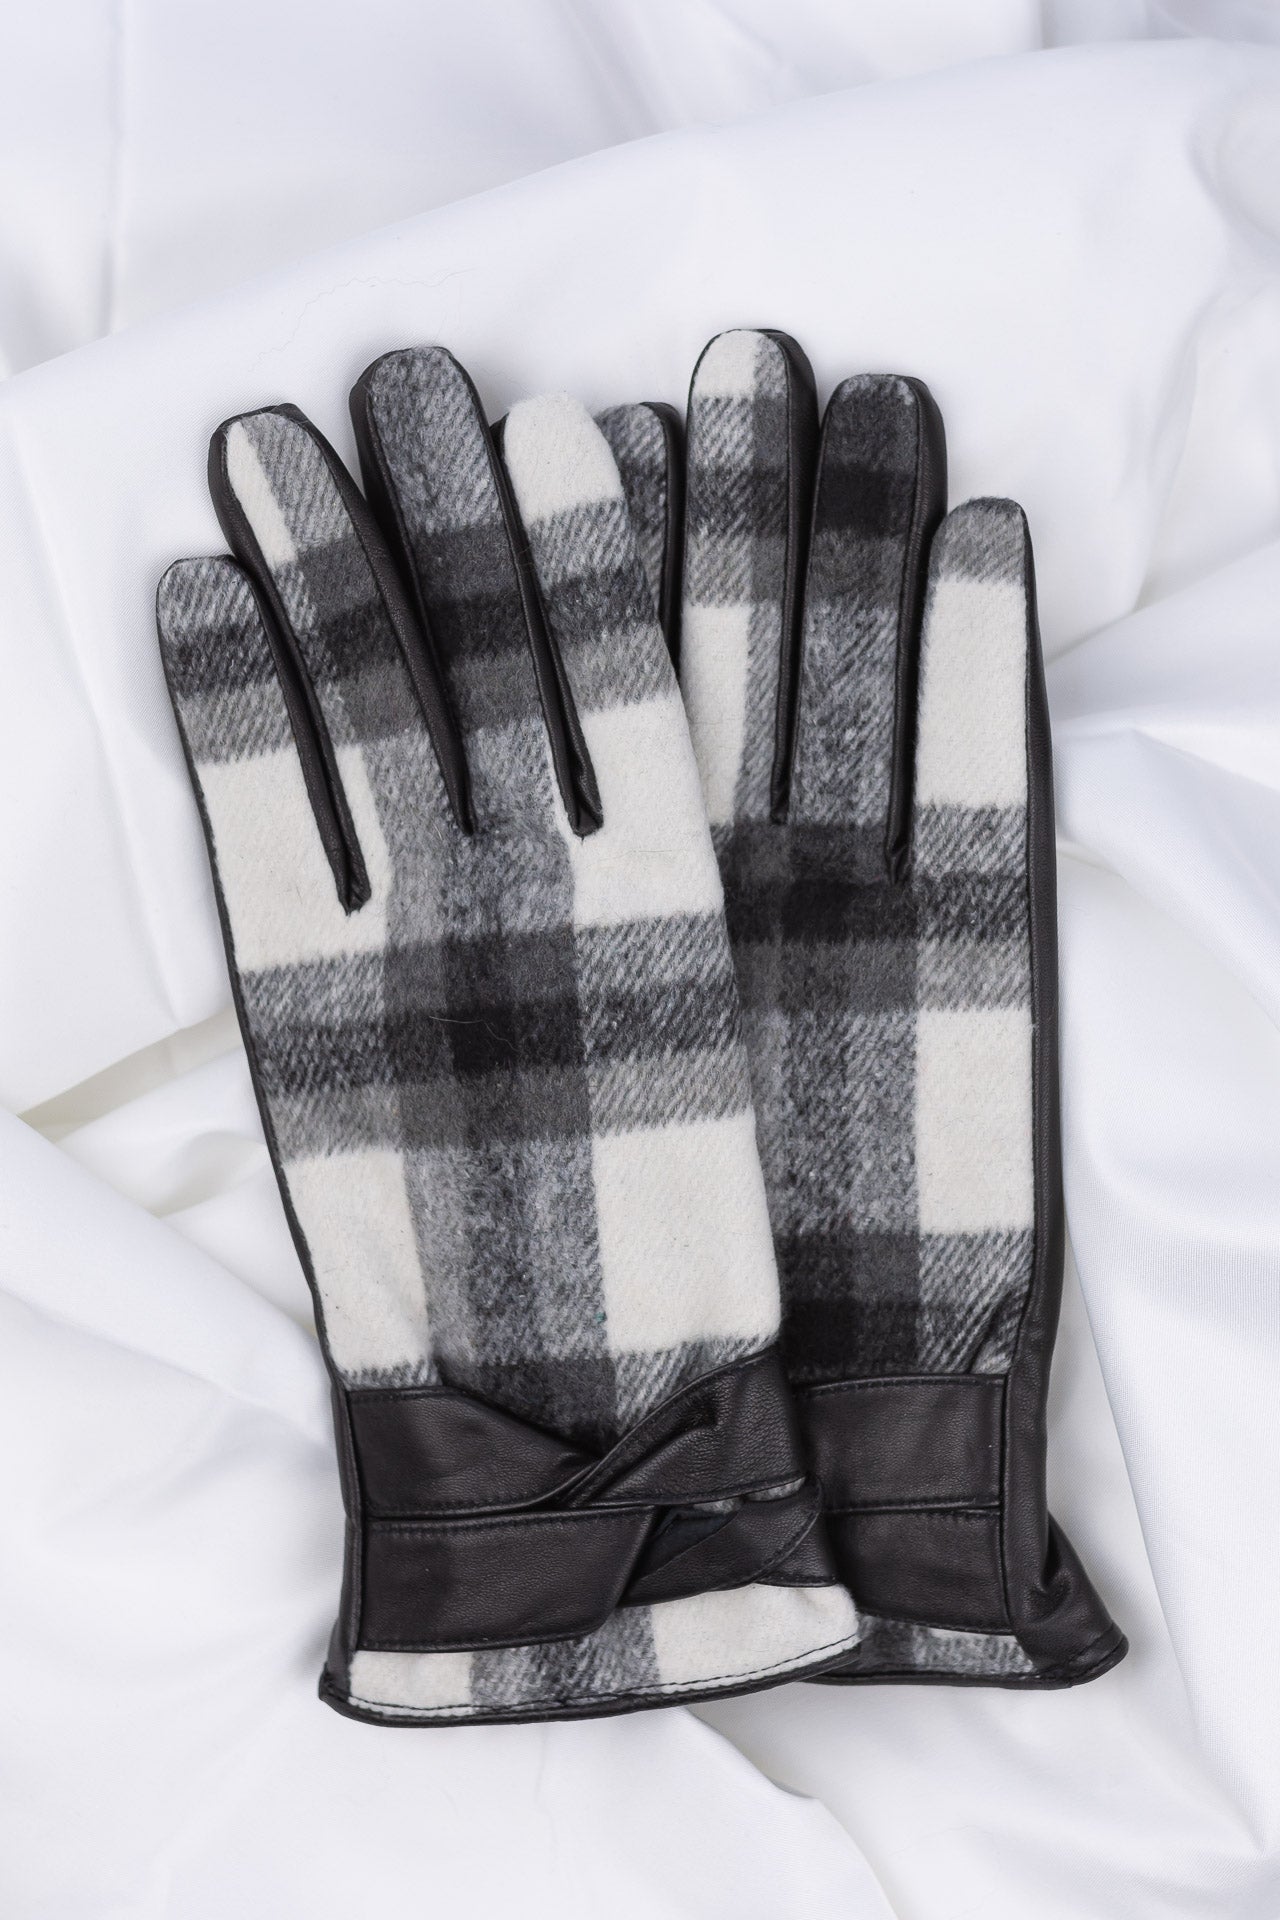 Checked leather gloves black and white Jolanda | ladies 